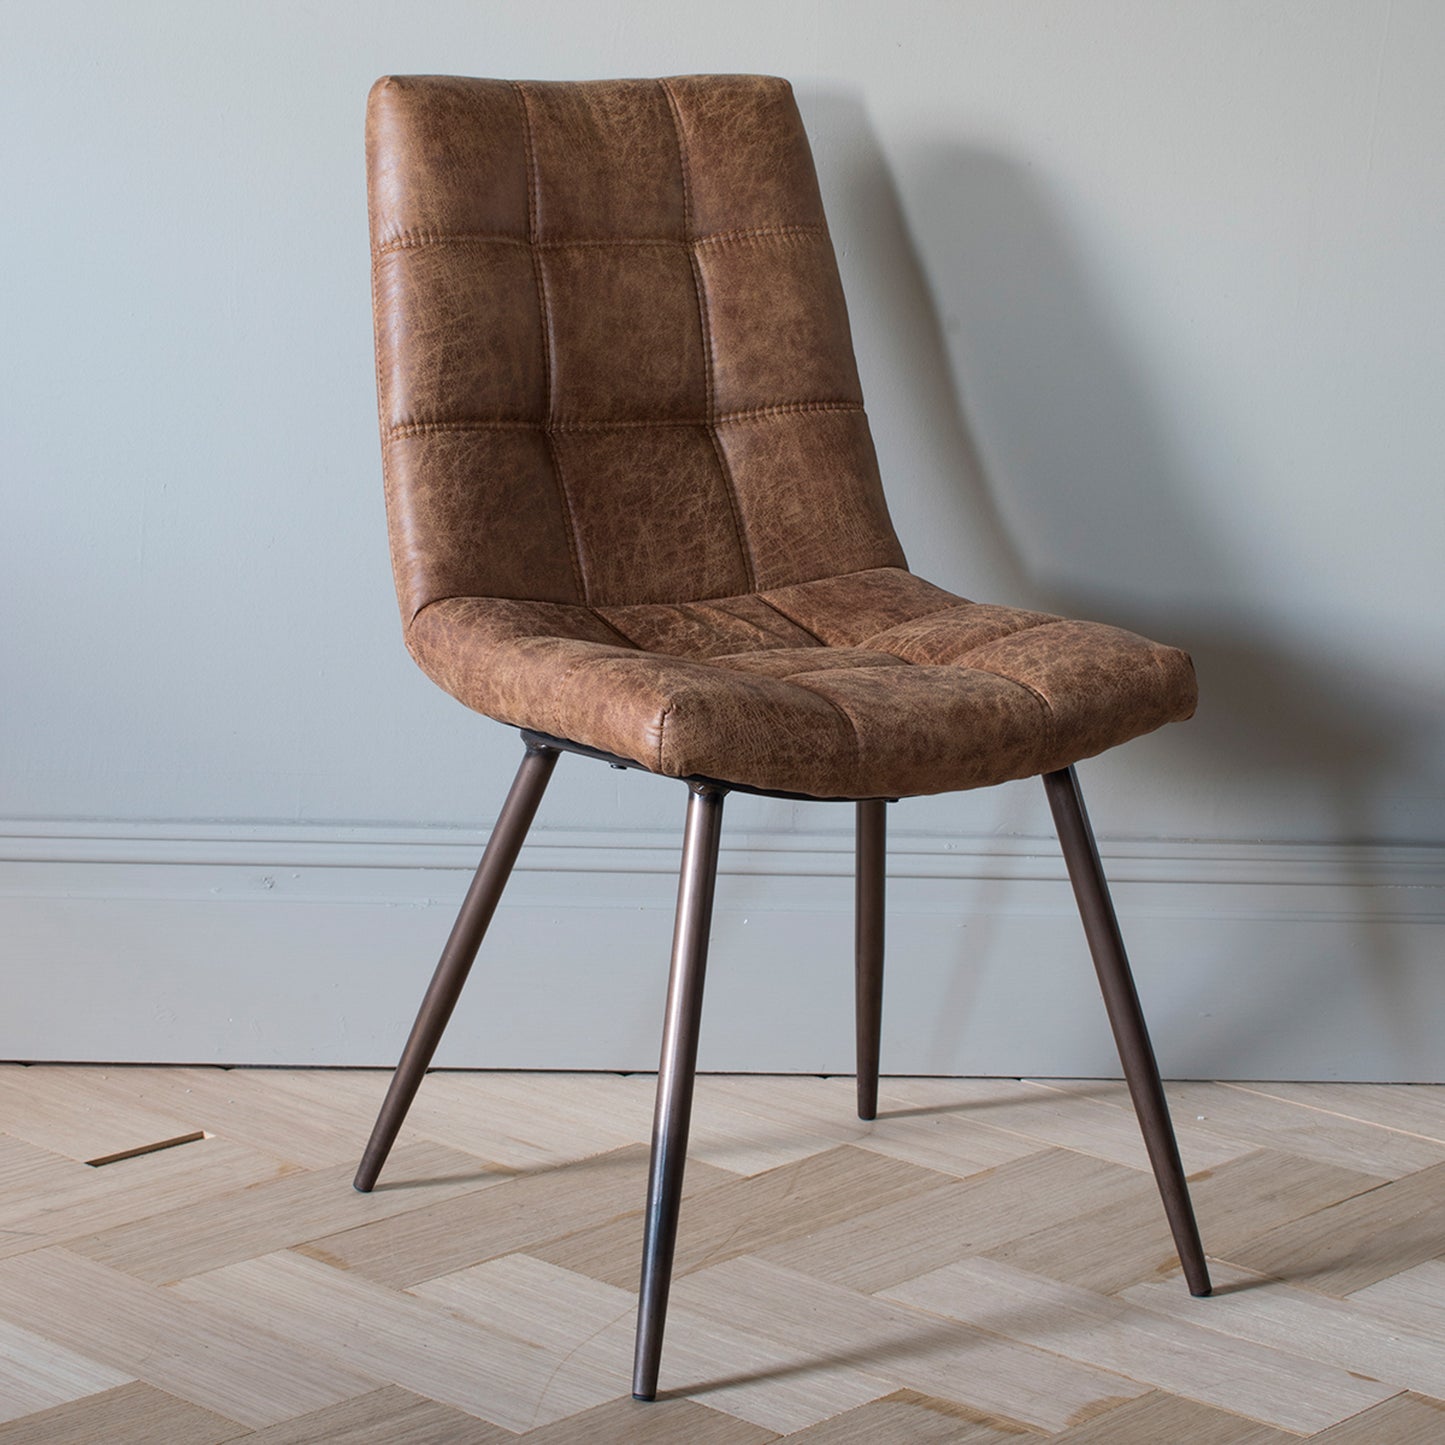 Interior decor, Home furniture: A stylish Darwin Brown Chair (2pk) from Kikiathome.co.uk enhances interior decor on a wooden floor.